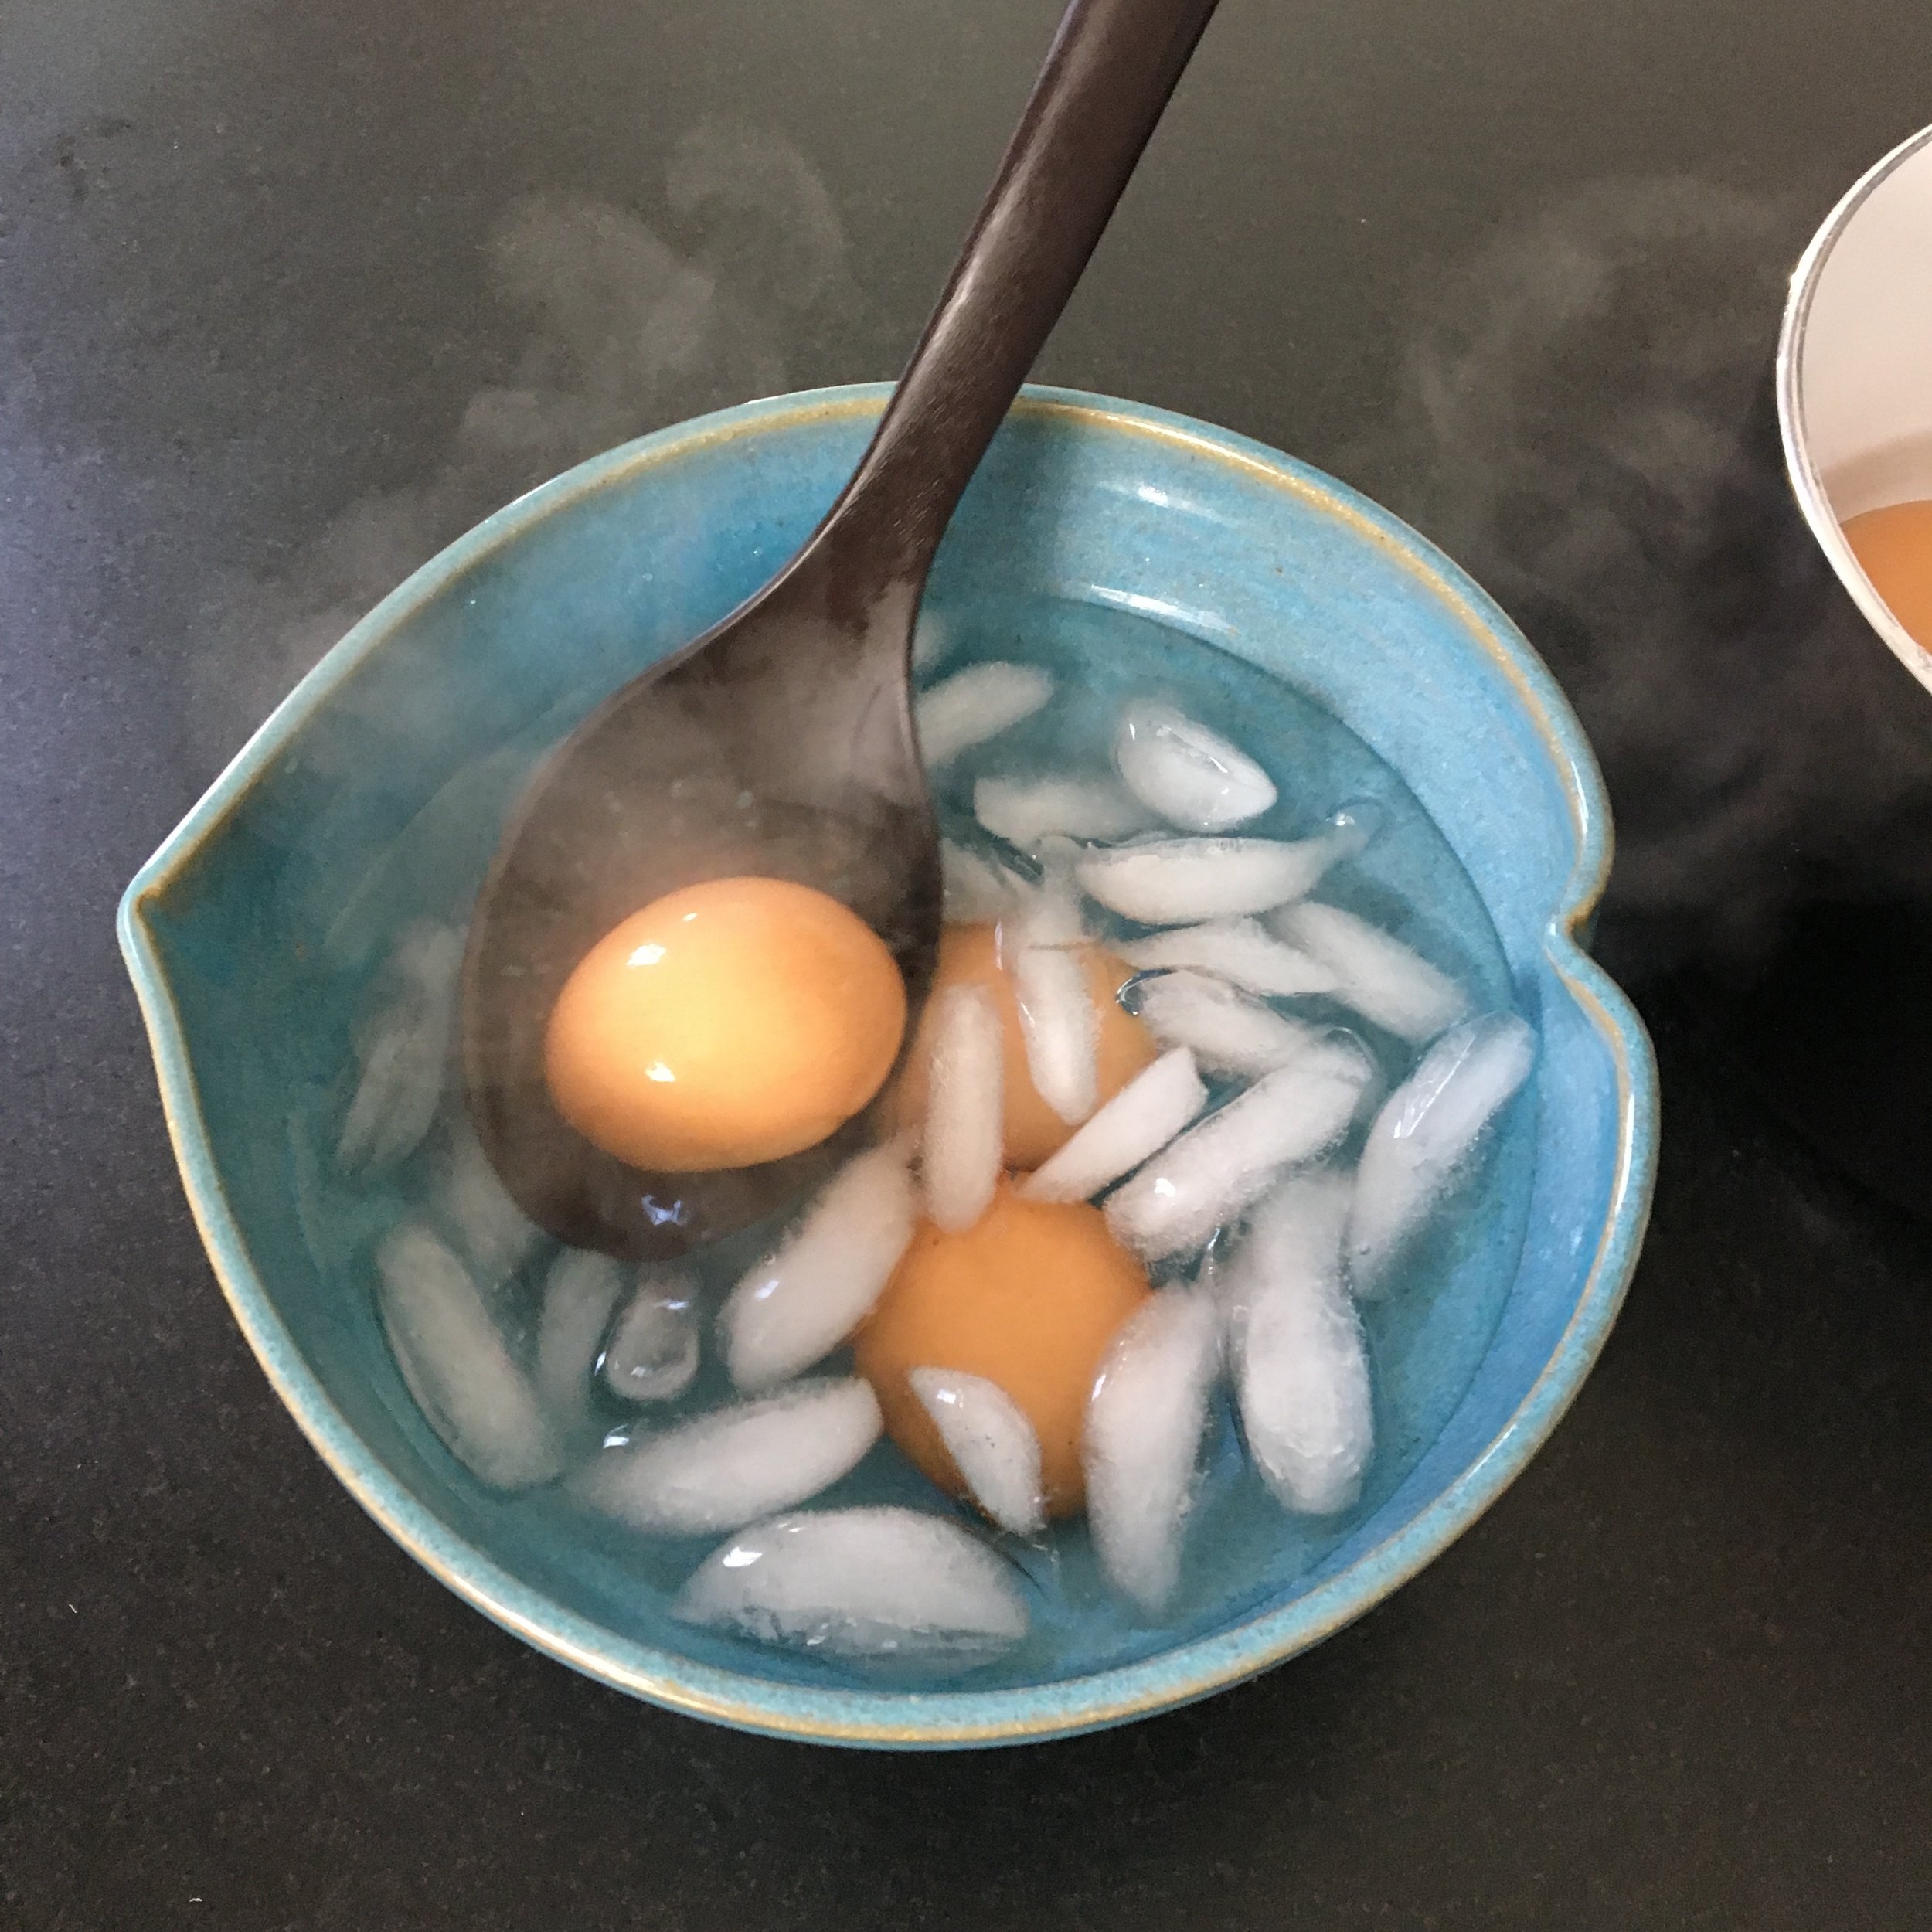 Step 5: Transfer eggs to ice bath